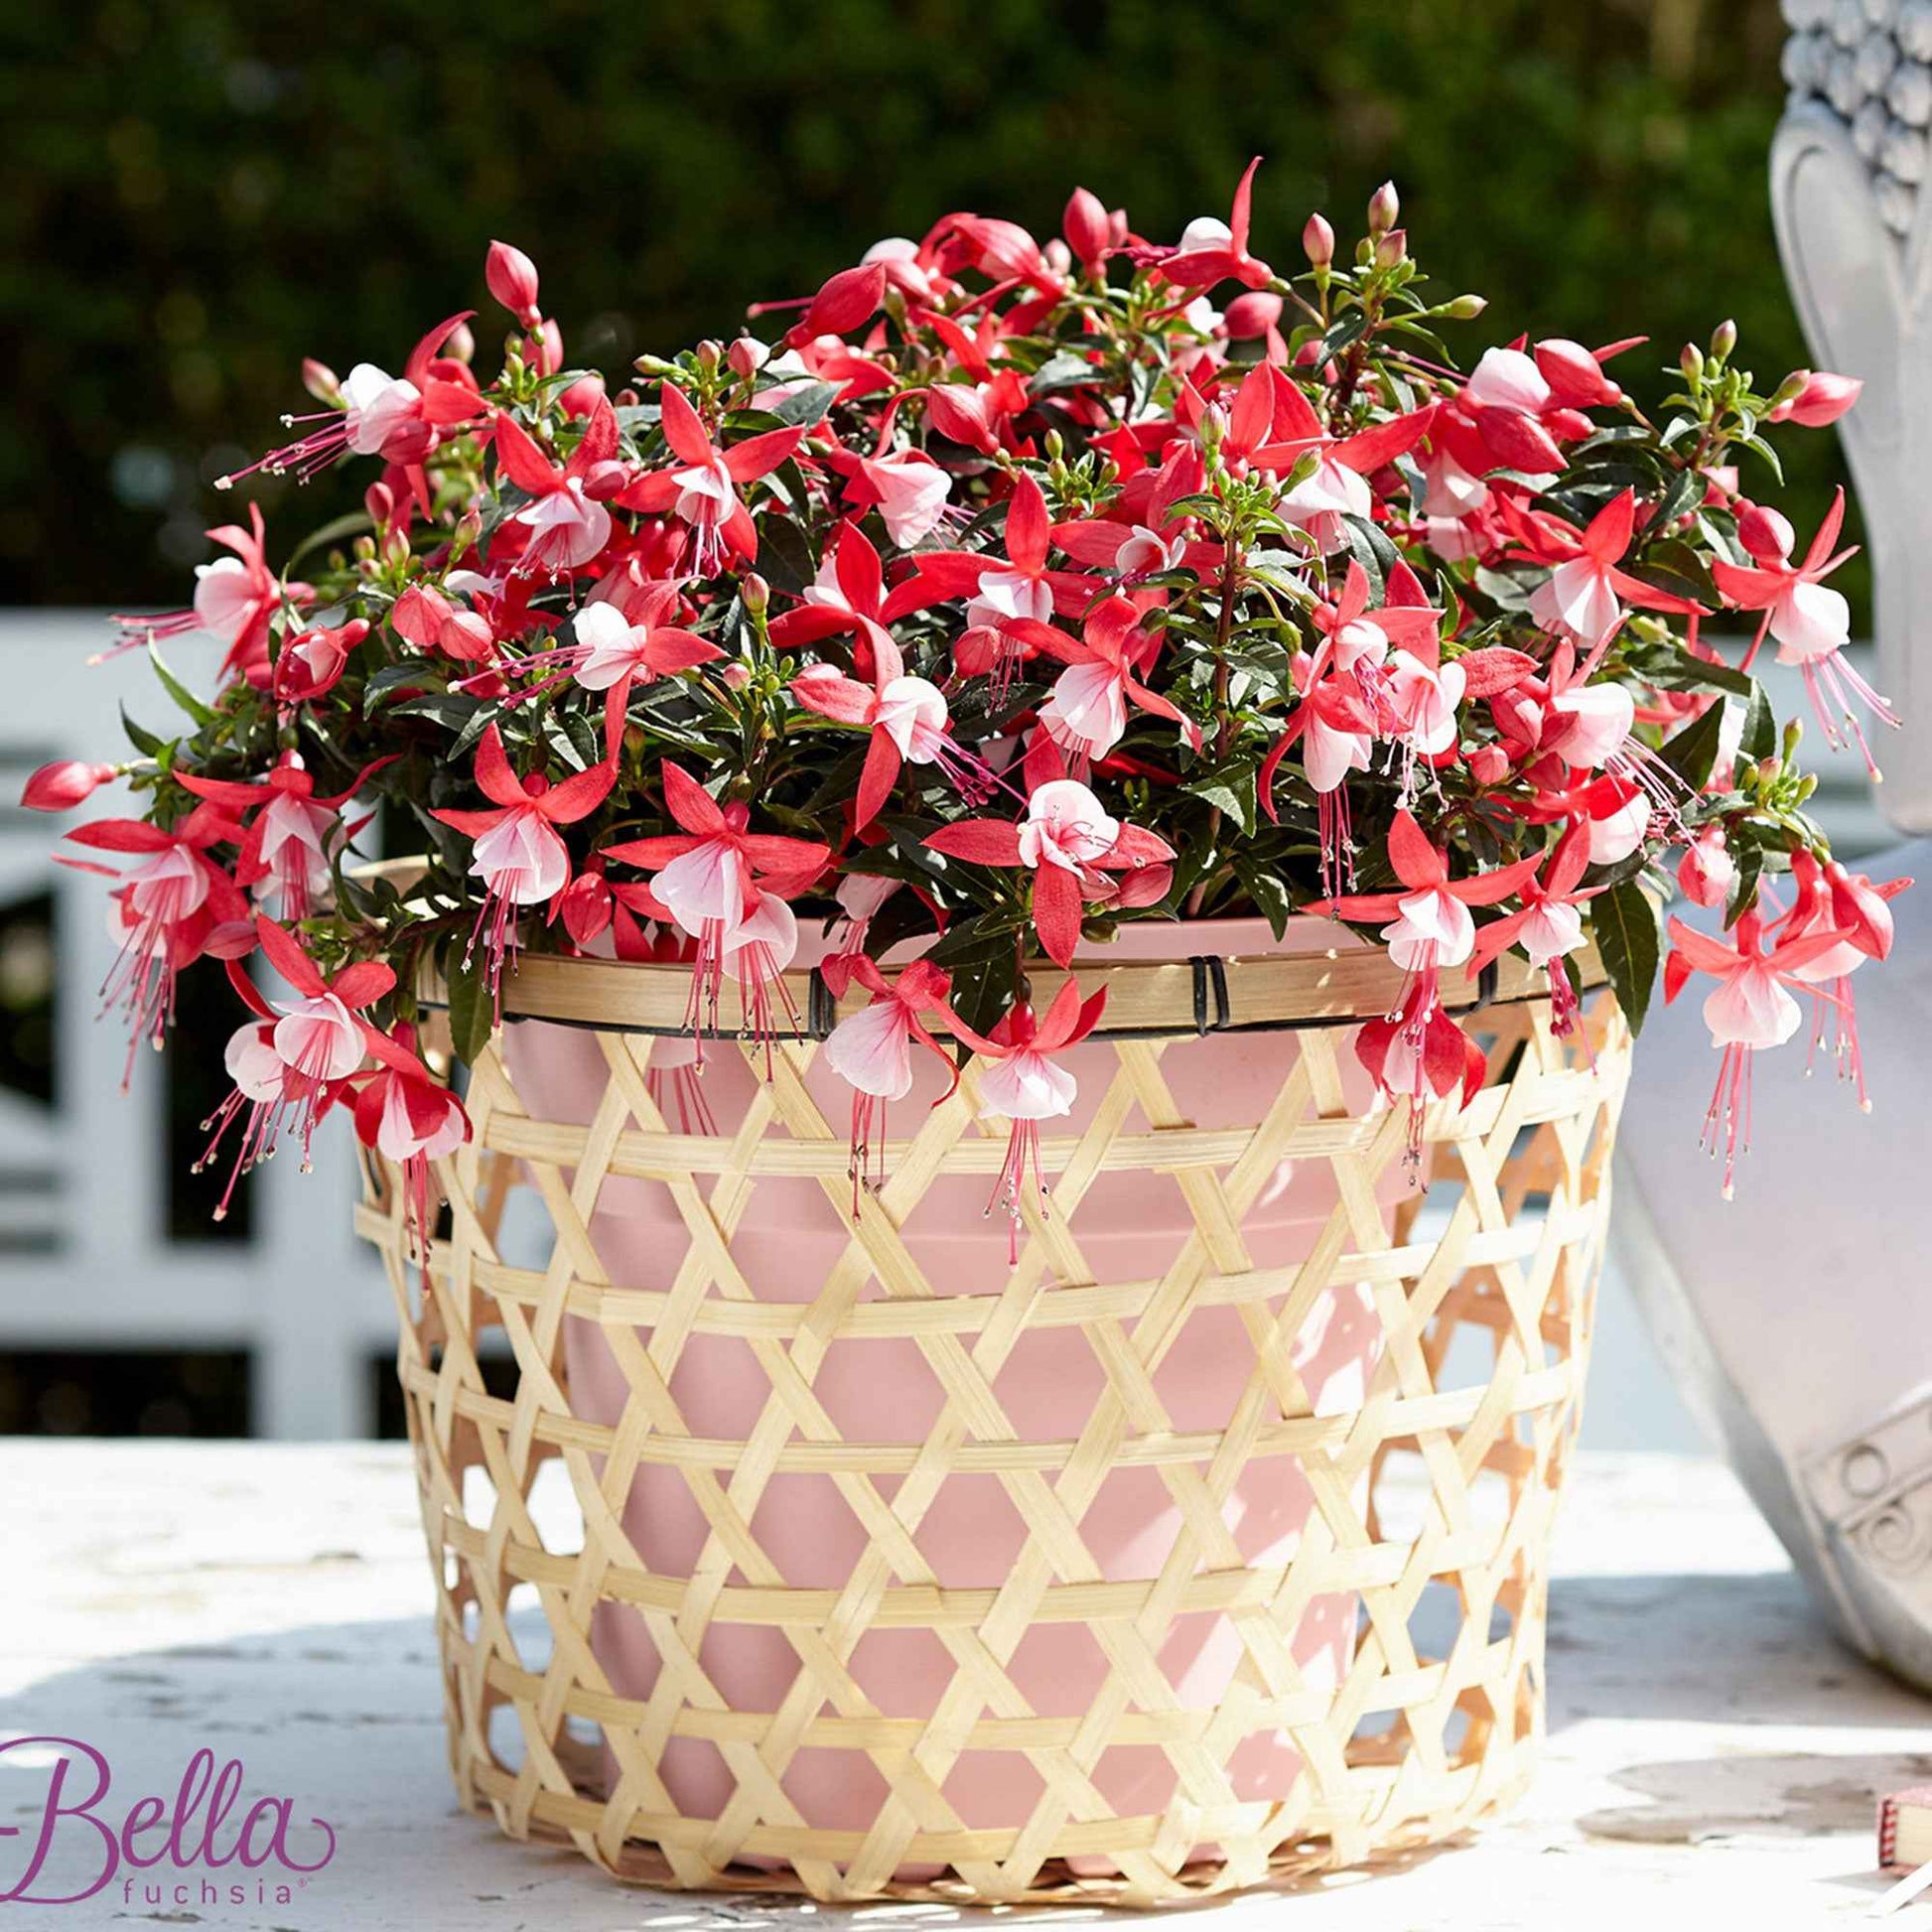 3x Fuchsia 'Evita' rouge-blanc - Fleurs d'été